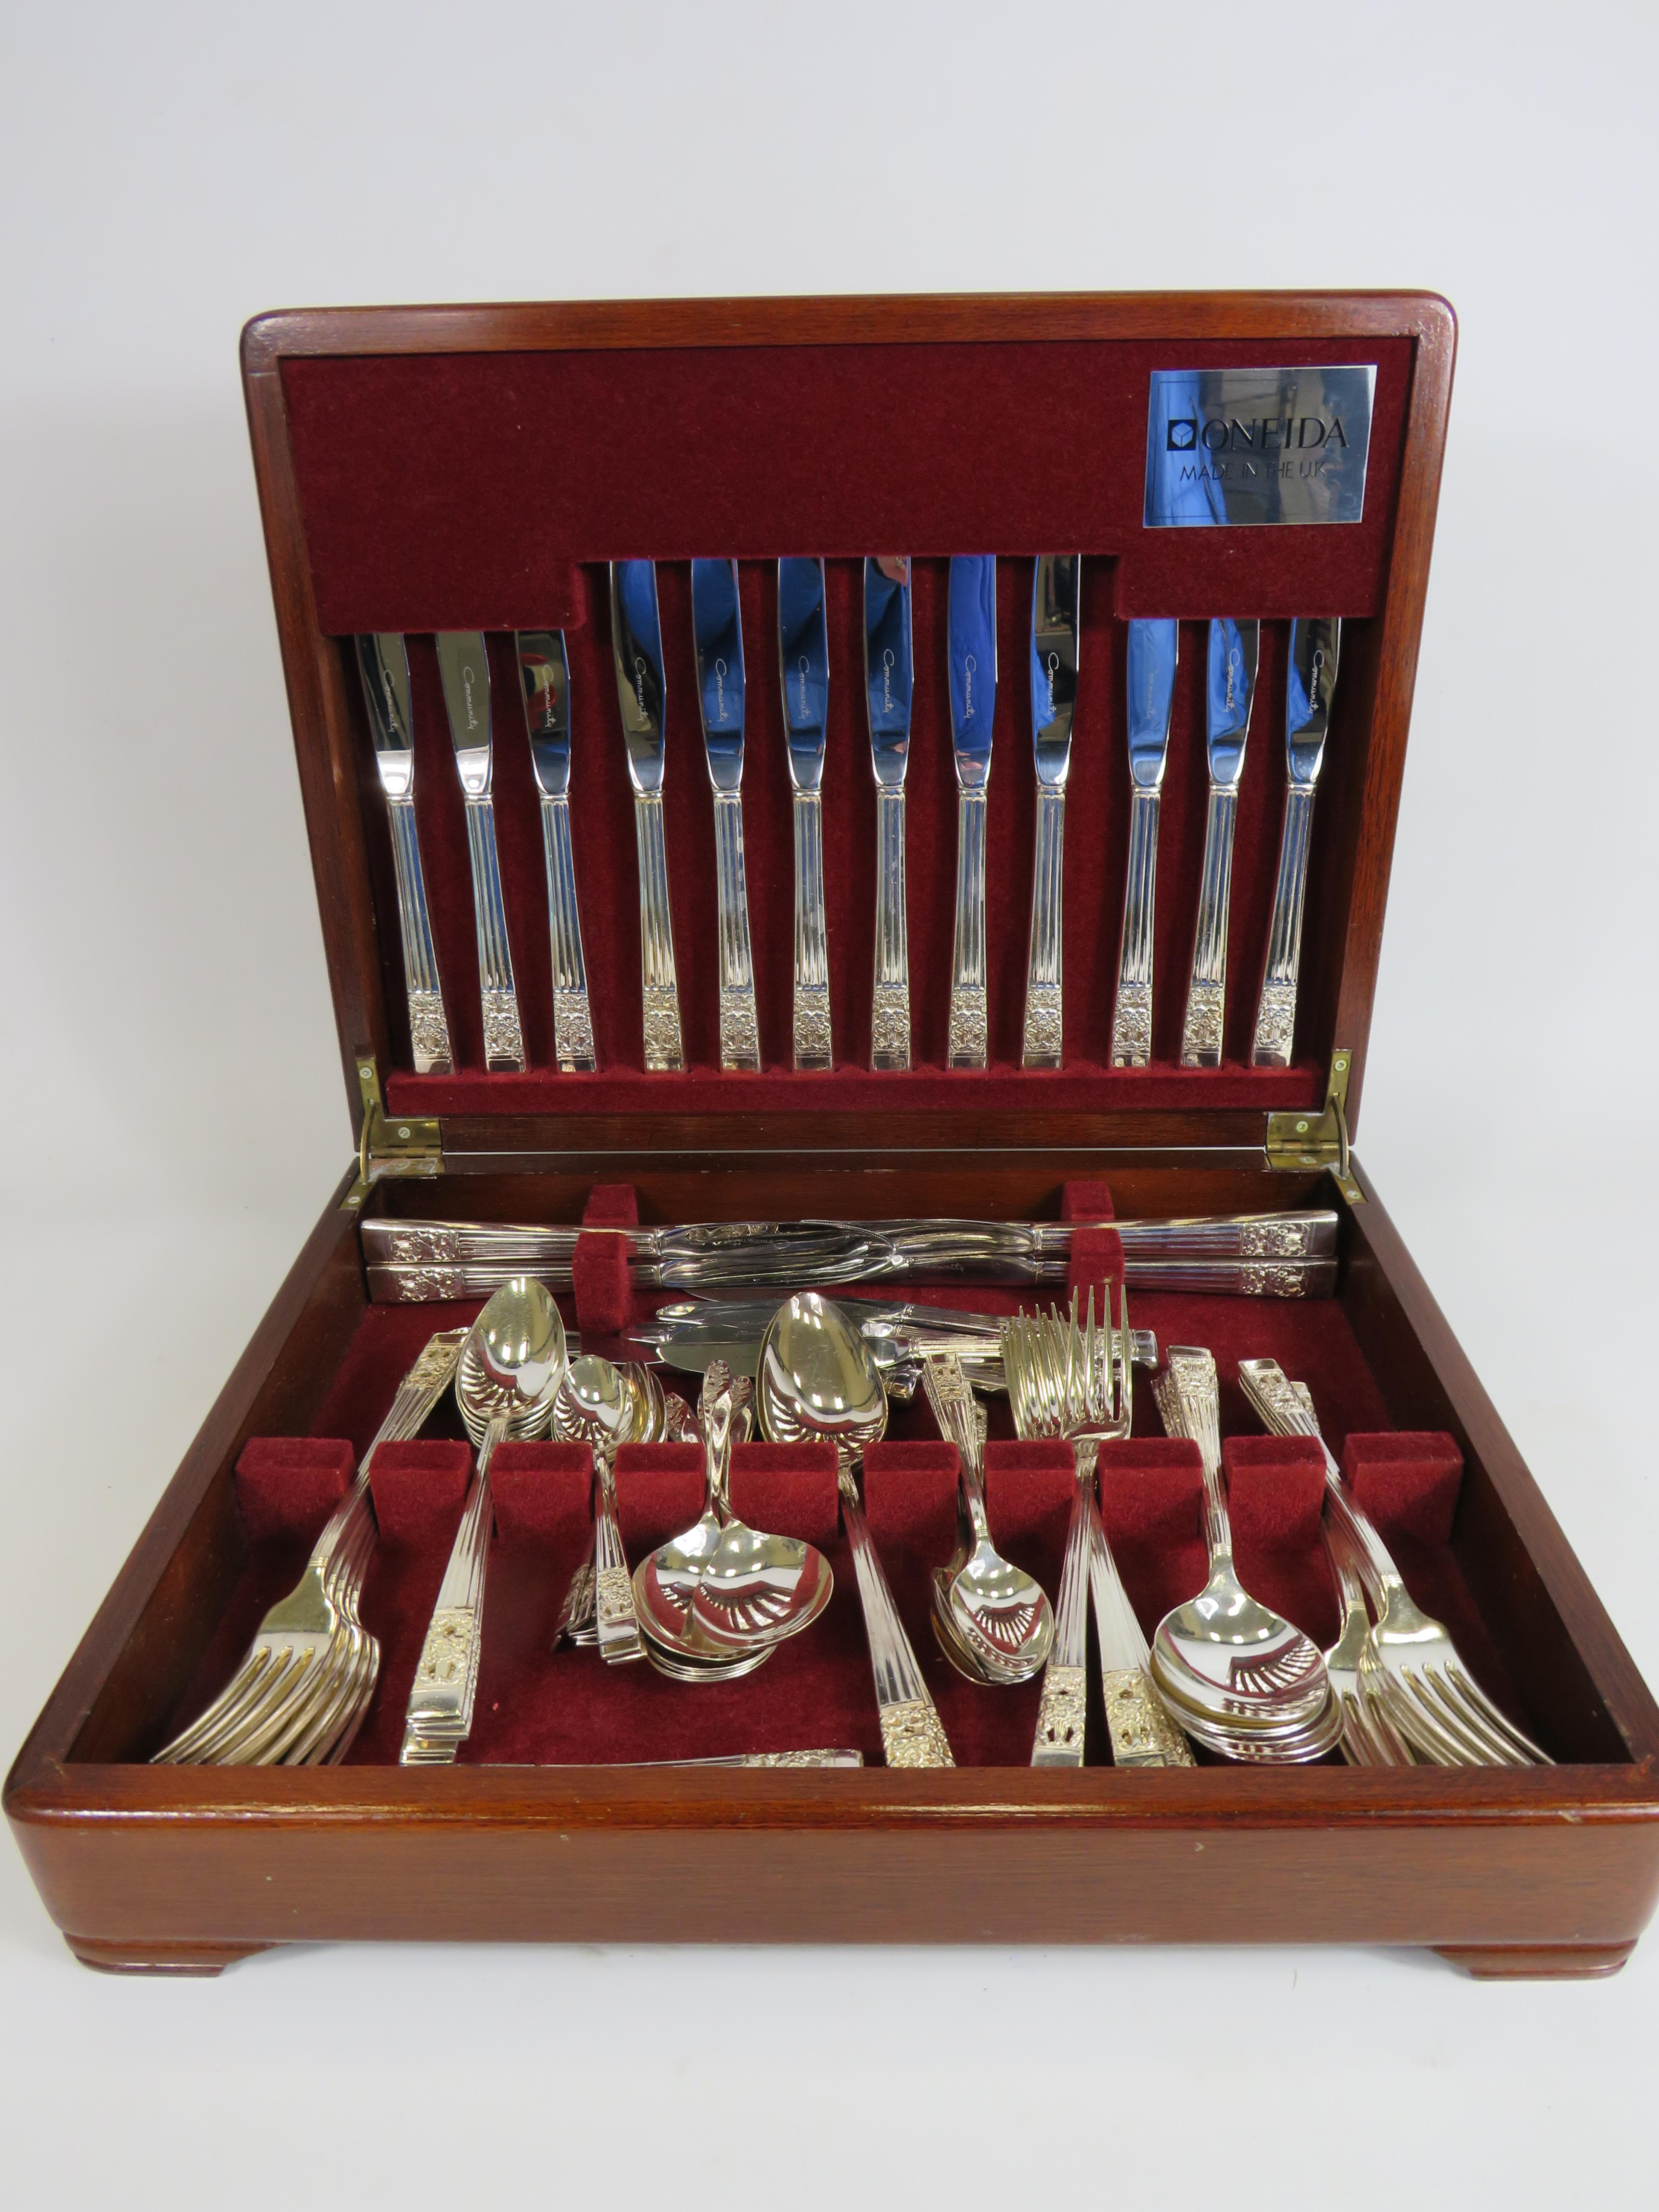 79 Piece Oneida cutlery set in wooden case.